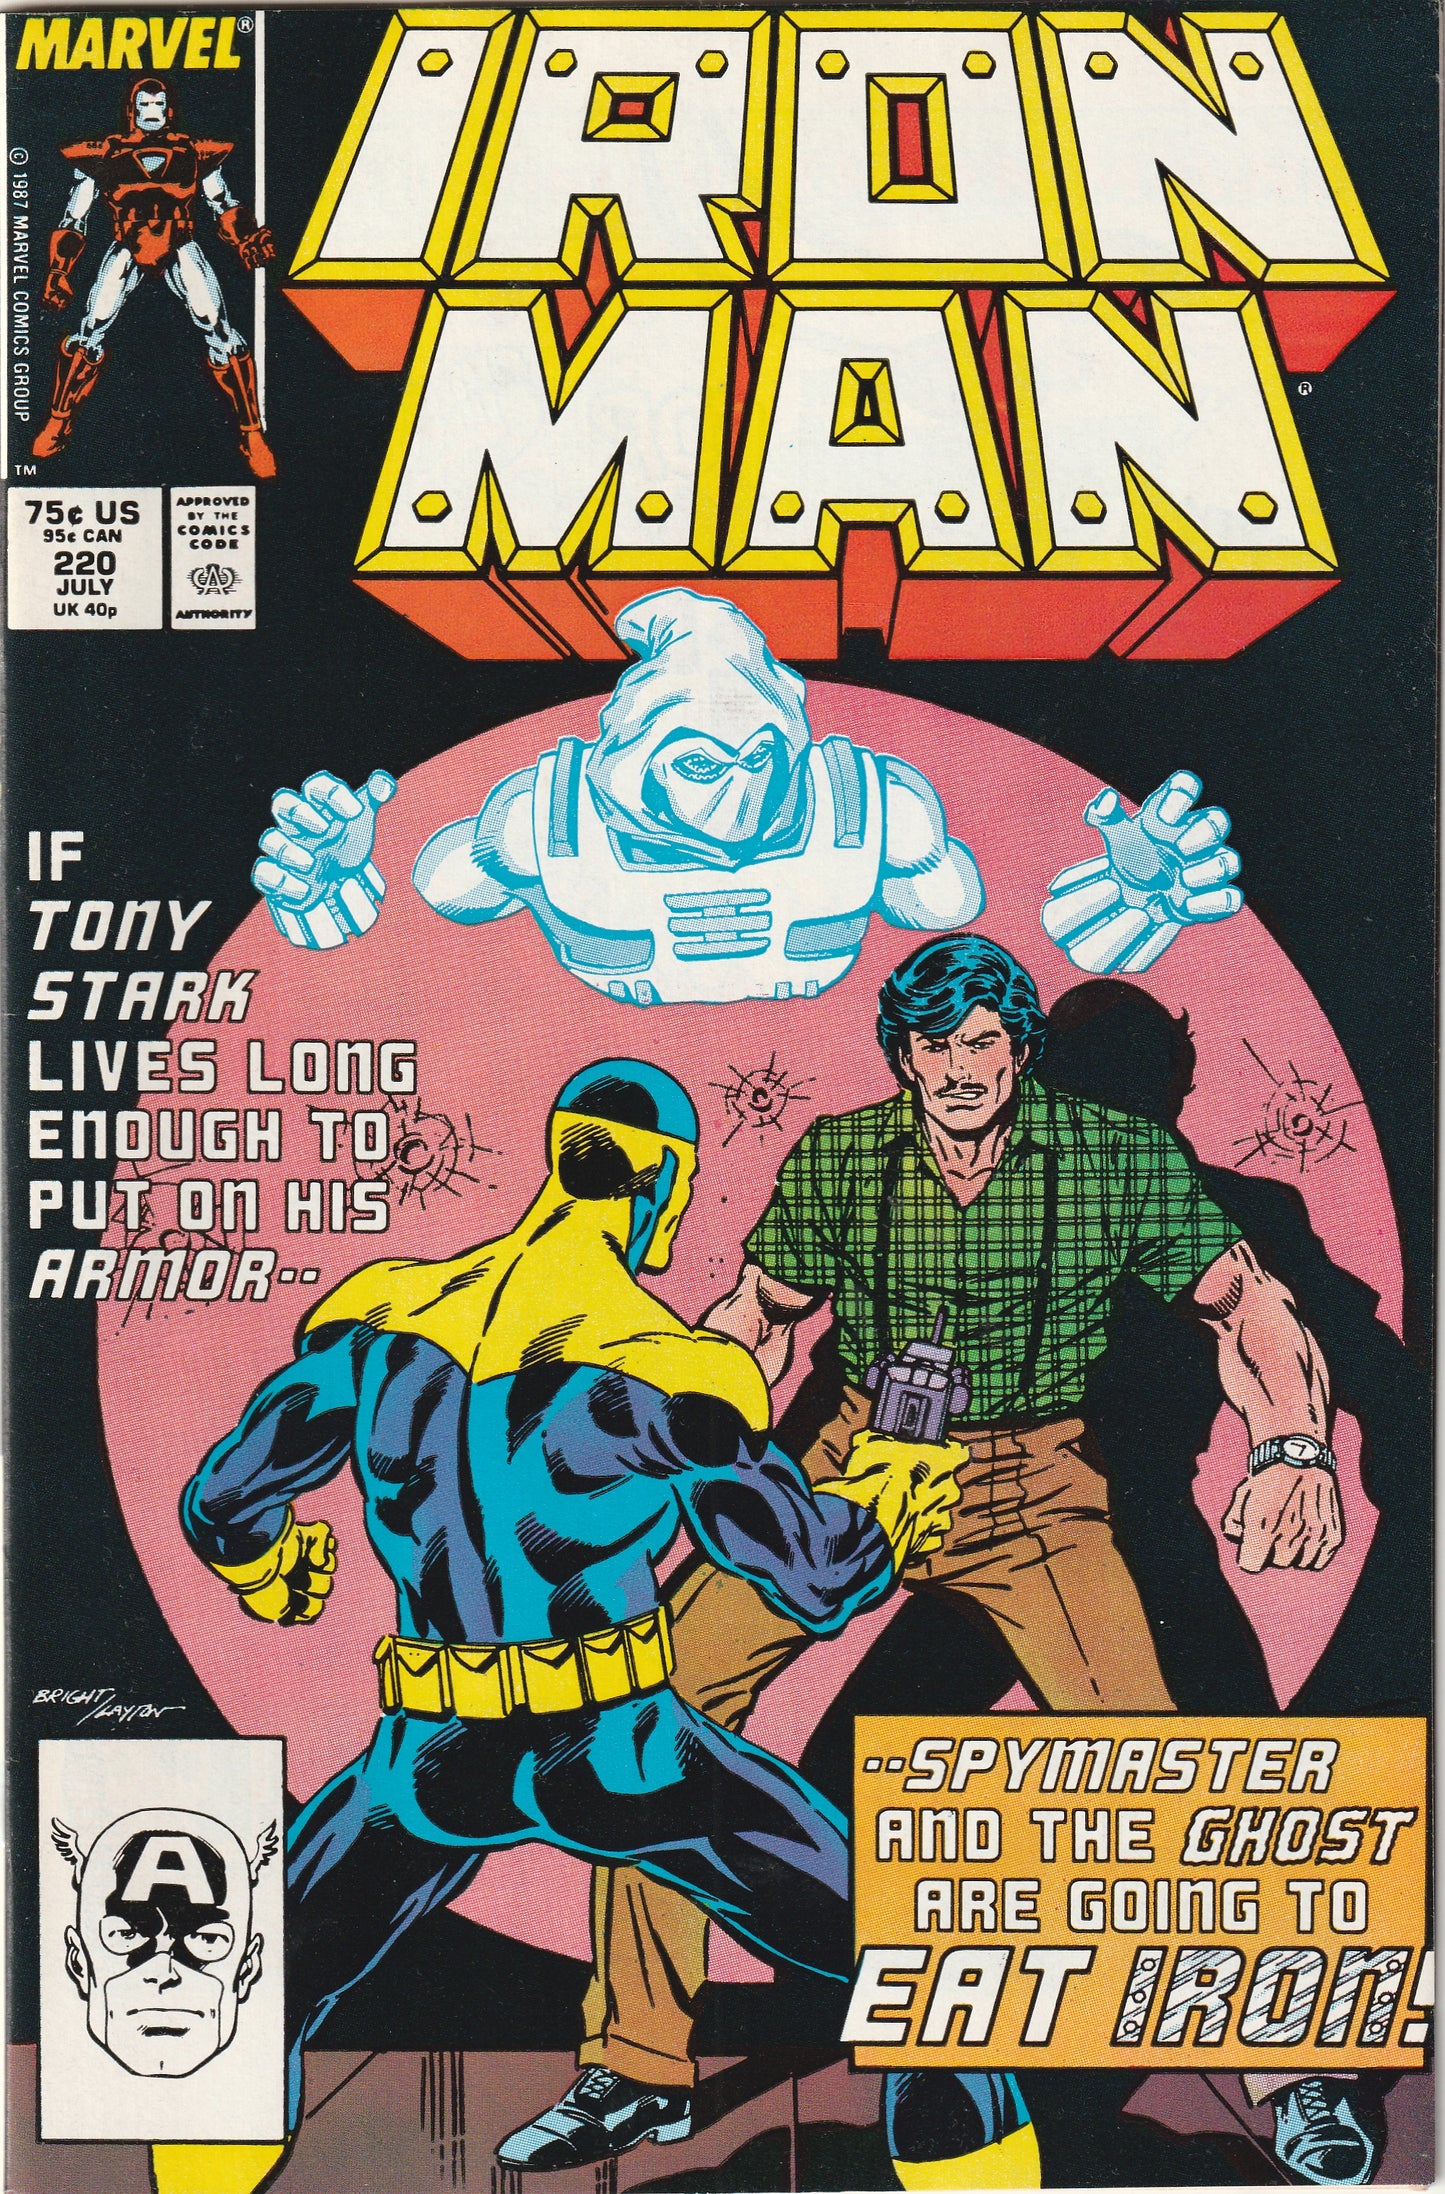 Iron Man #220 (1987)